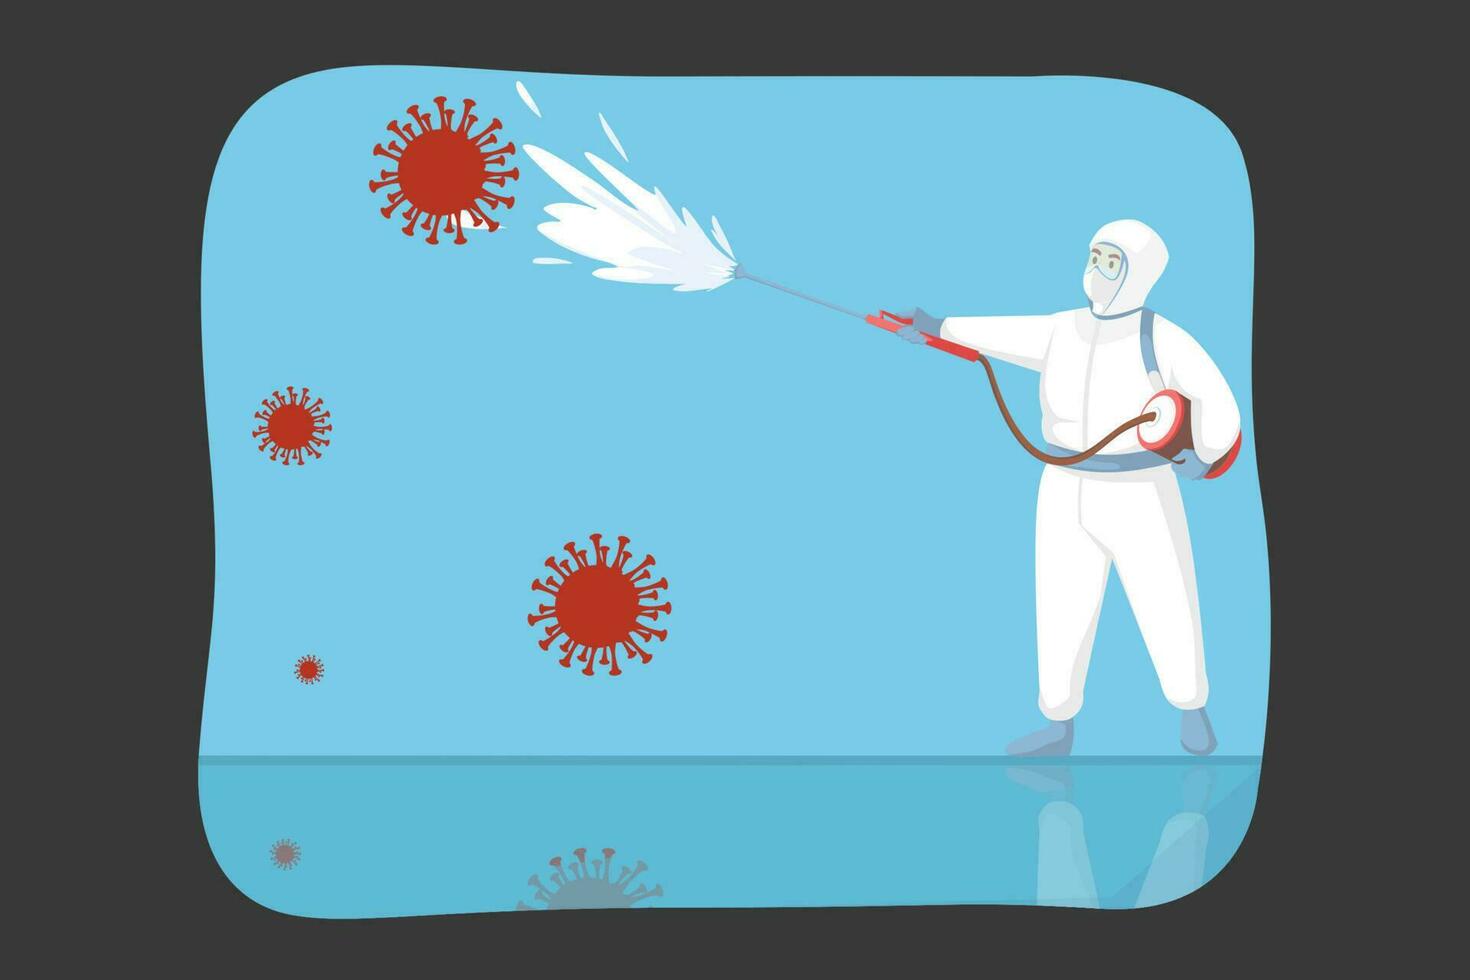 desinfección, coronavirus, limpiar, proteccion, peligro biológico concepto vector